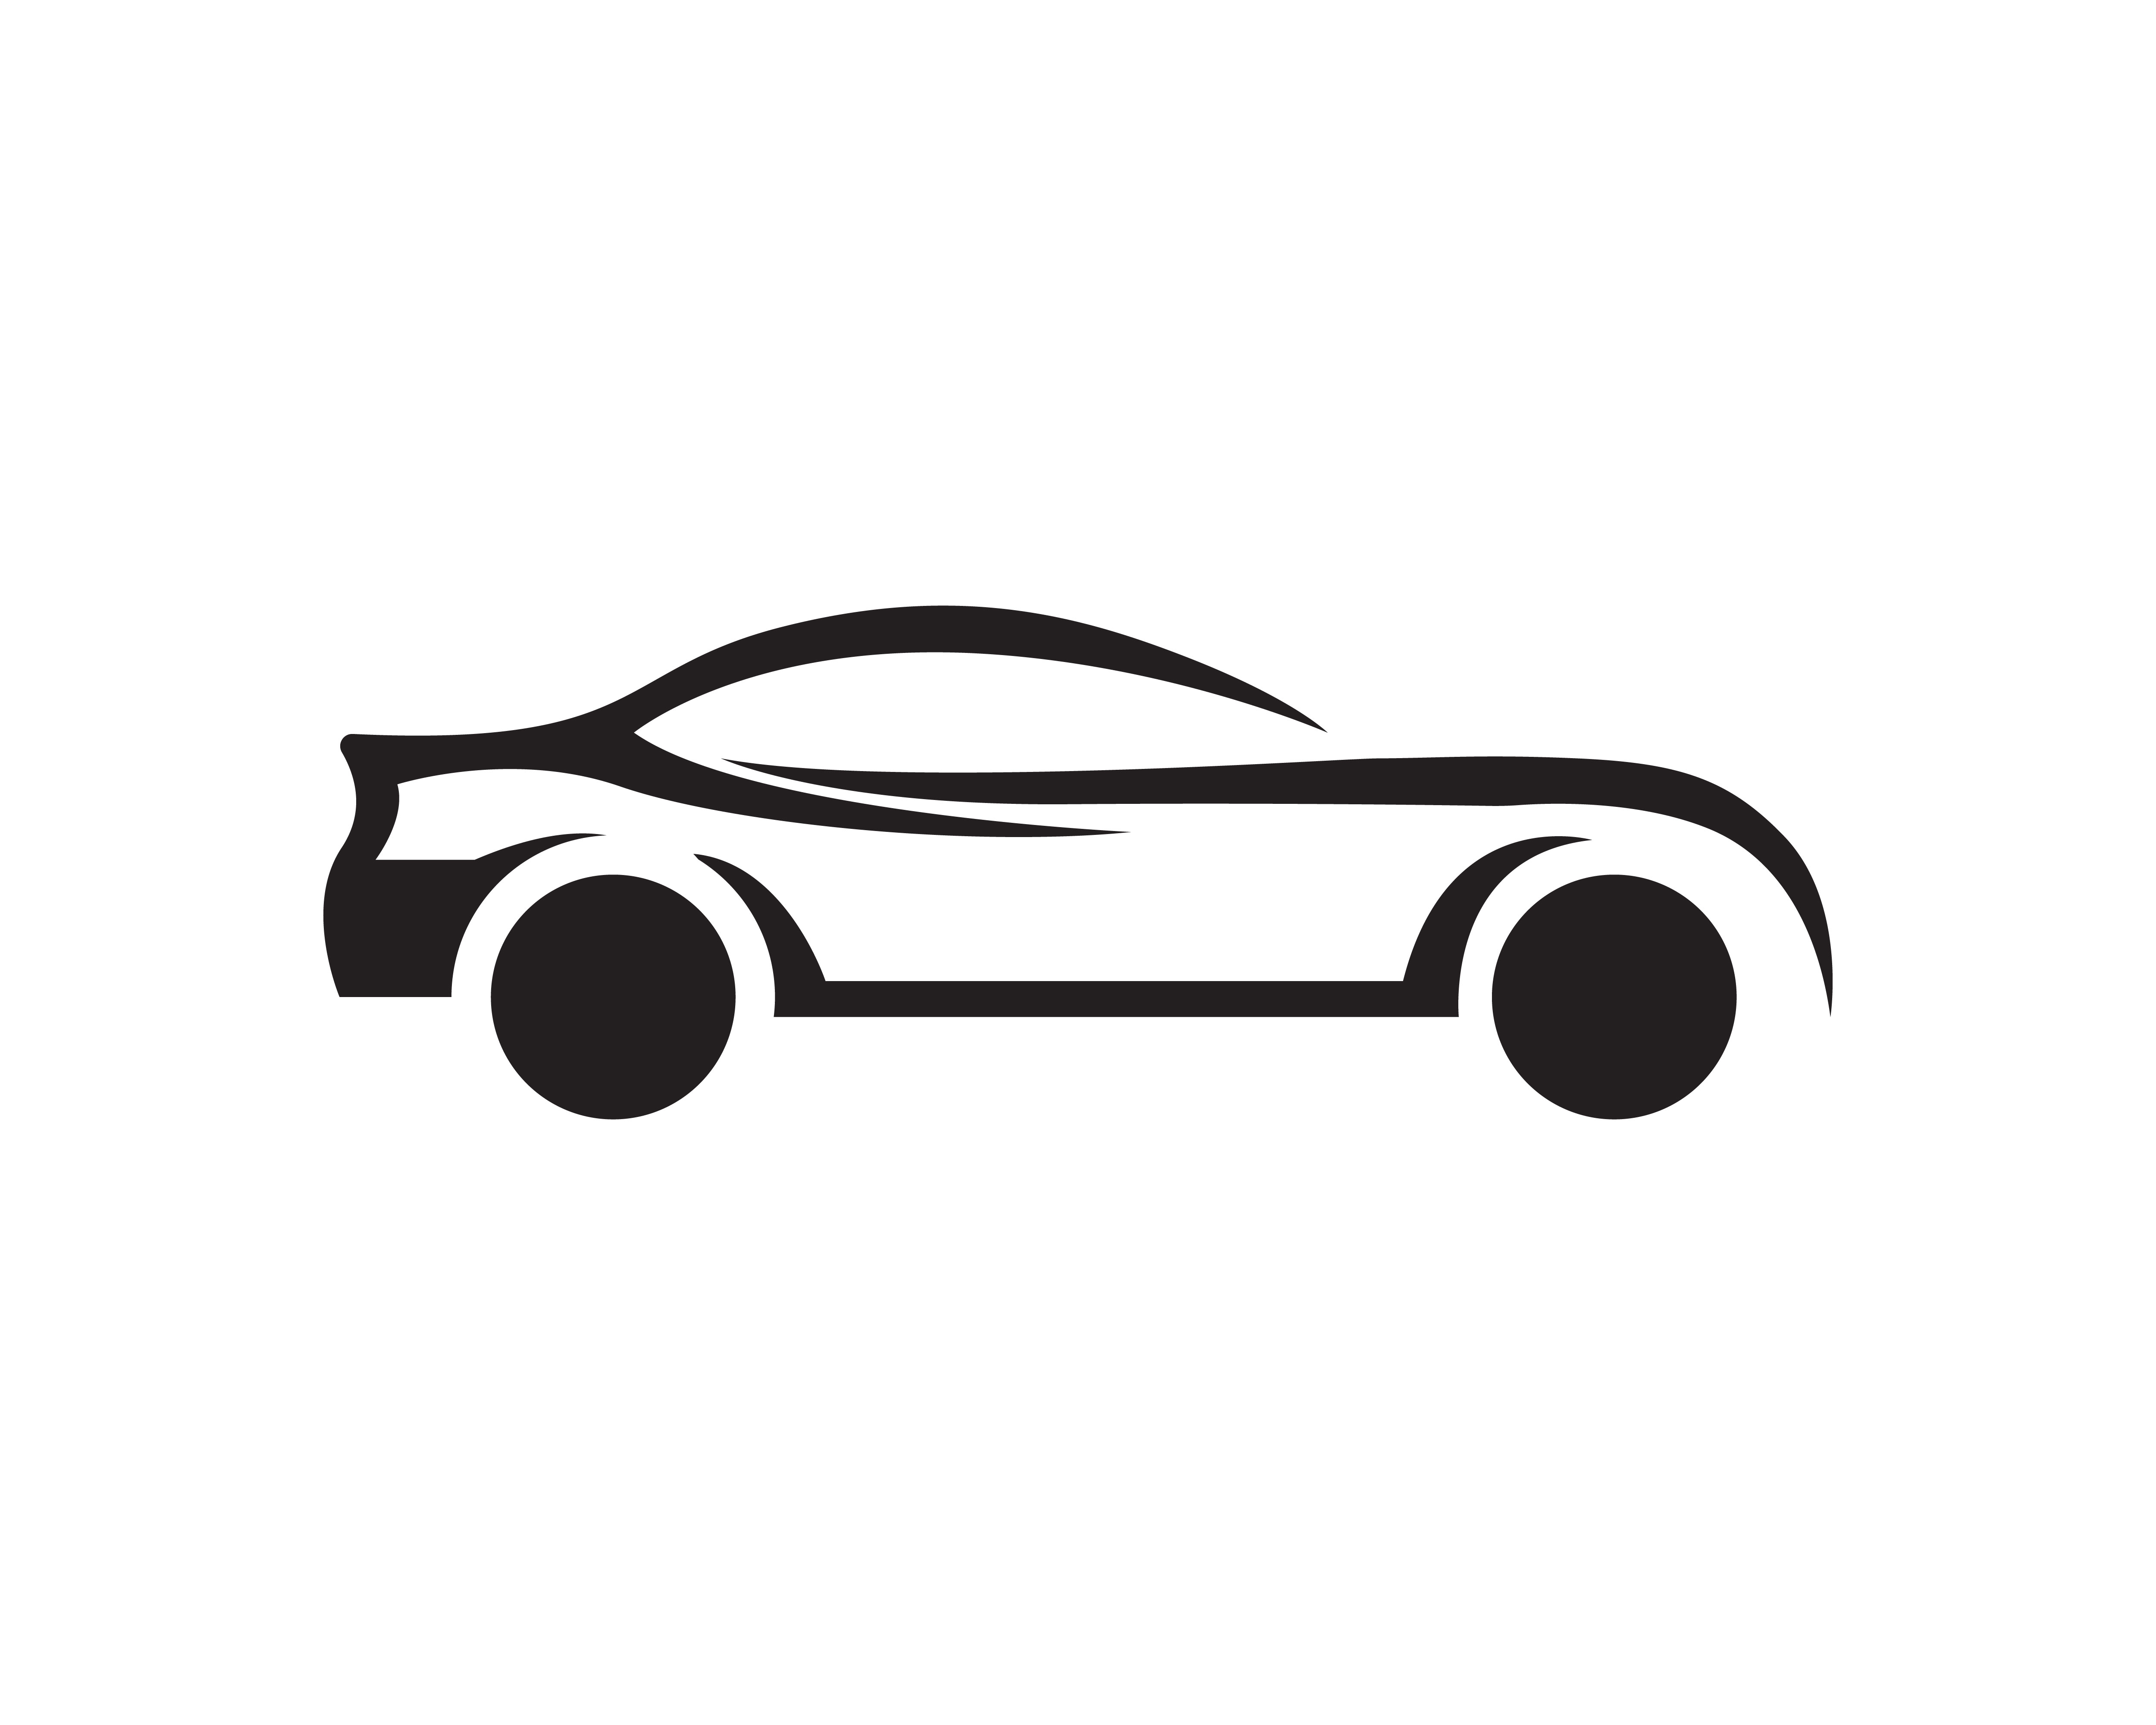 https://static.vecteezy.com/system/resources/previews/000/623/239/original/auto-car-logo-template-vector-icon.jpg